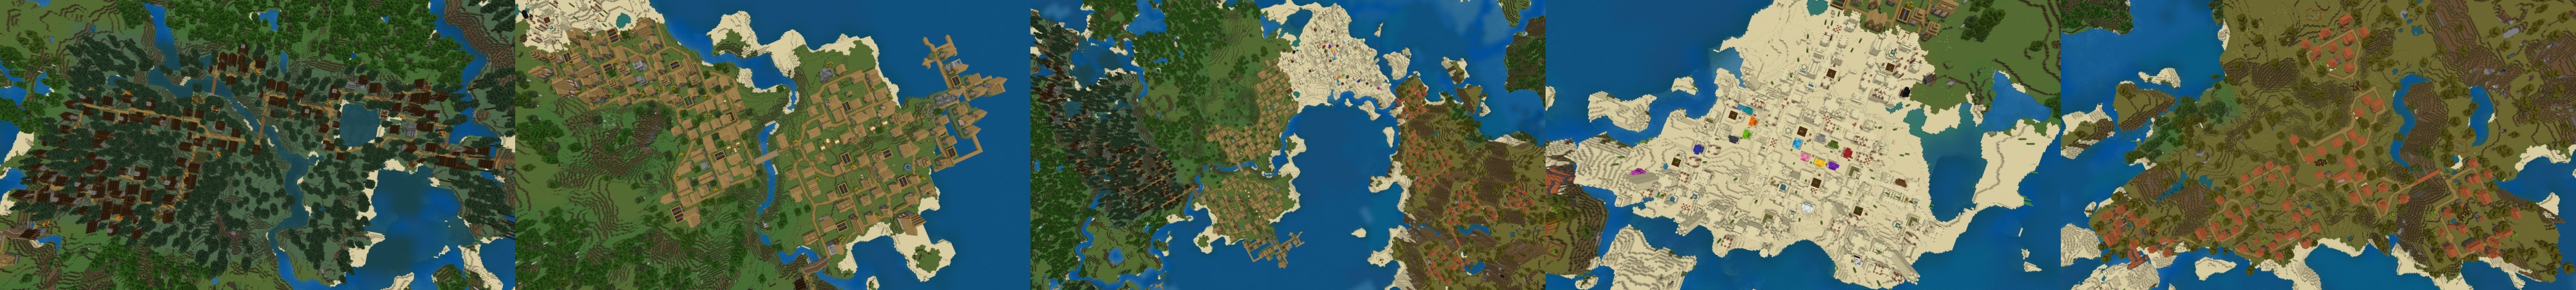 Mega Village In Minecraft Marketplace Minecraft